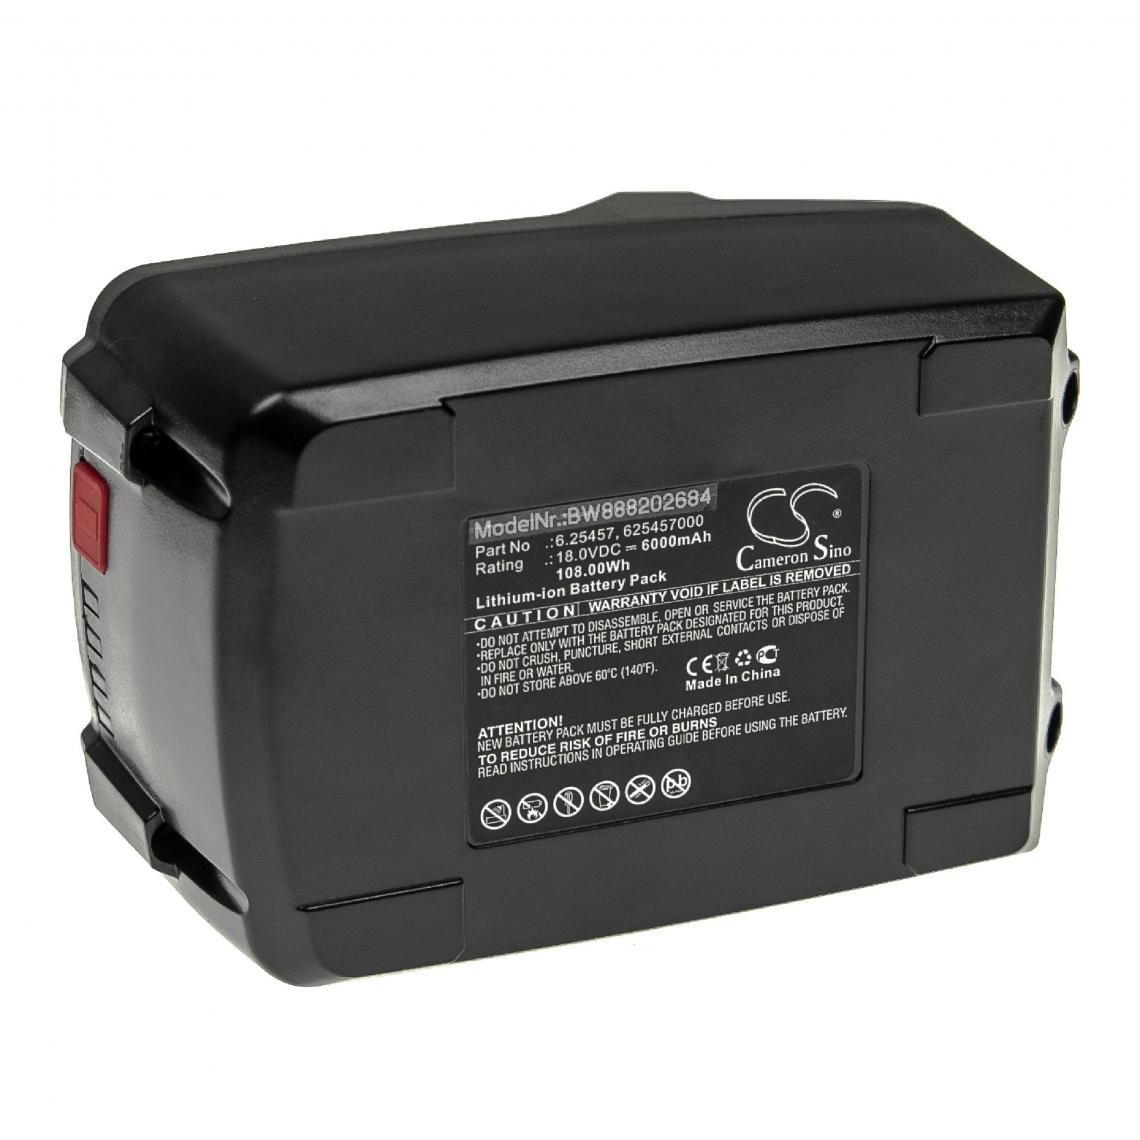 Vhbw - vhbw Batterie compatible avec Metabo SB 18 LTX BL I 602352500, SB 18 LTX BL I 602352650 outil électrique (6000mAh Li-ion 18 V) - Autre appareil de mesure